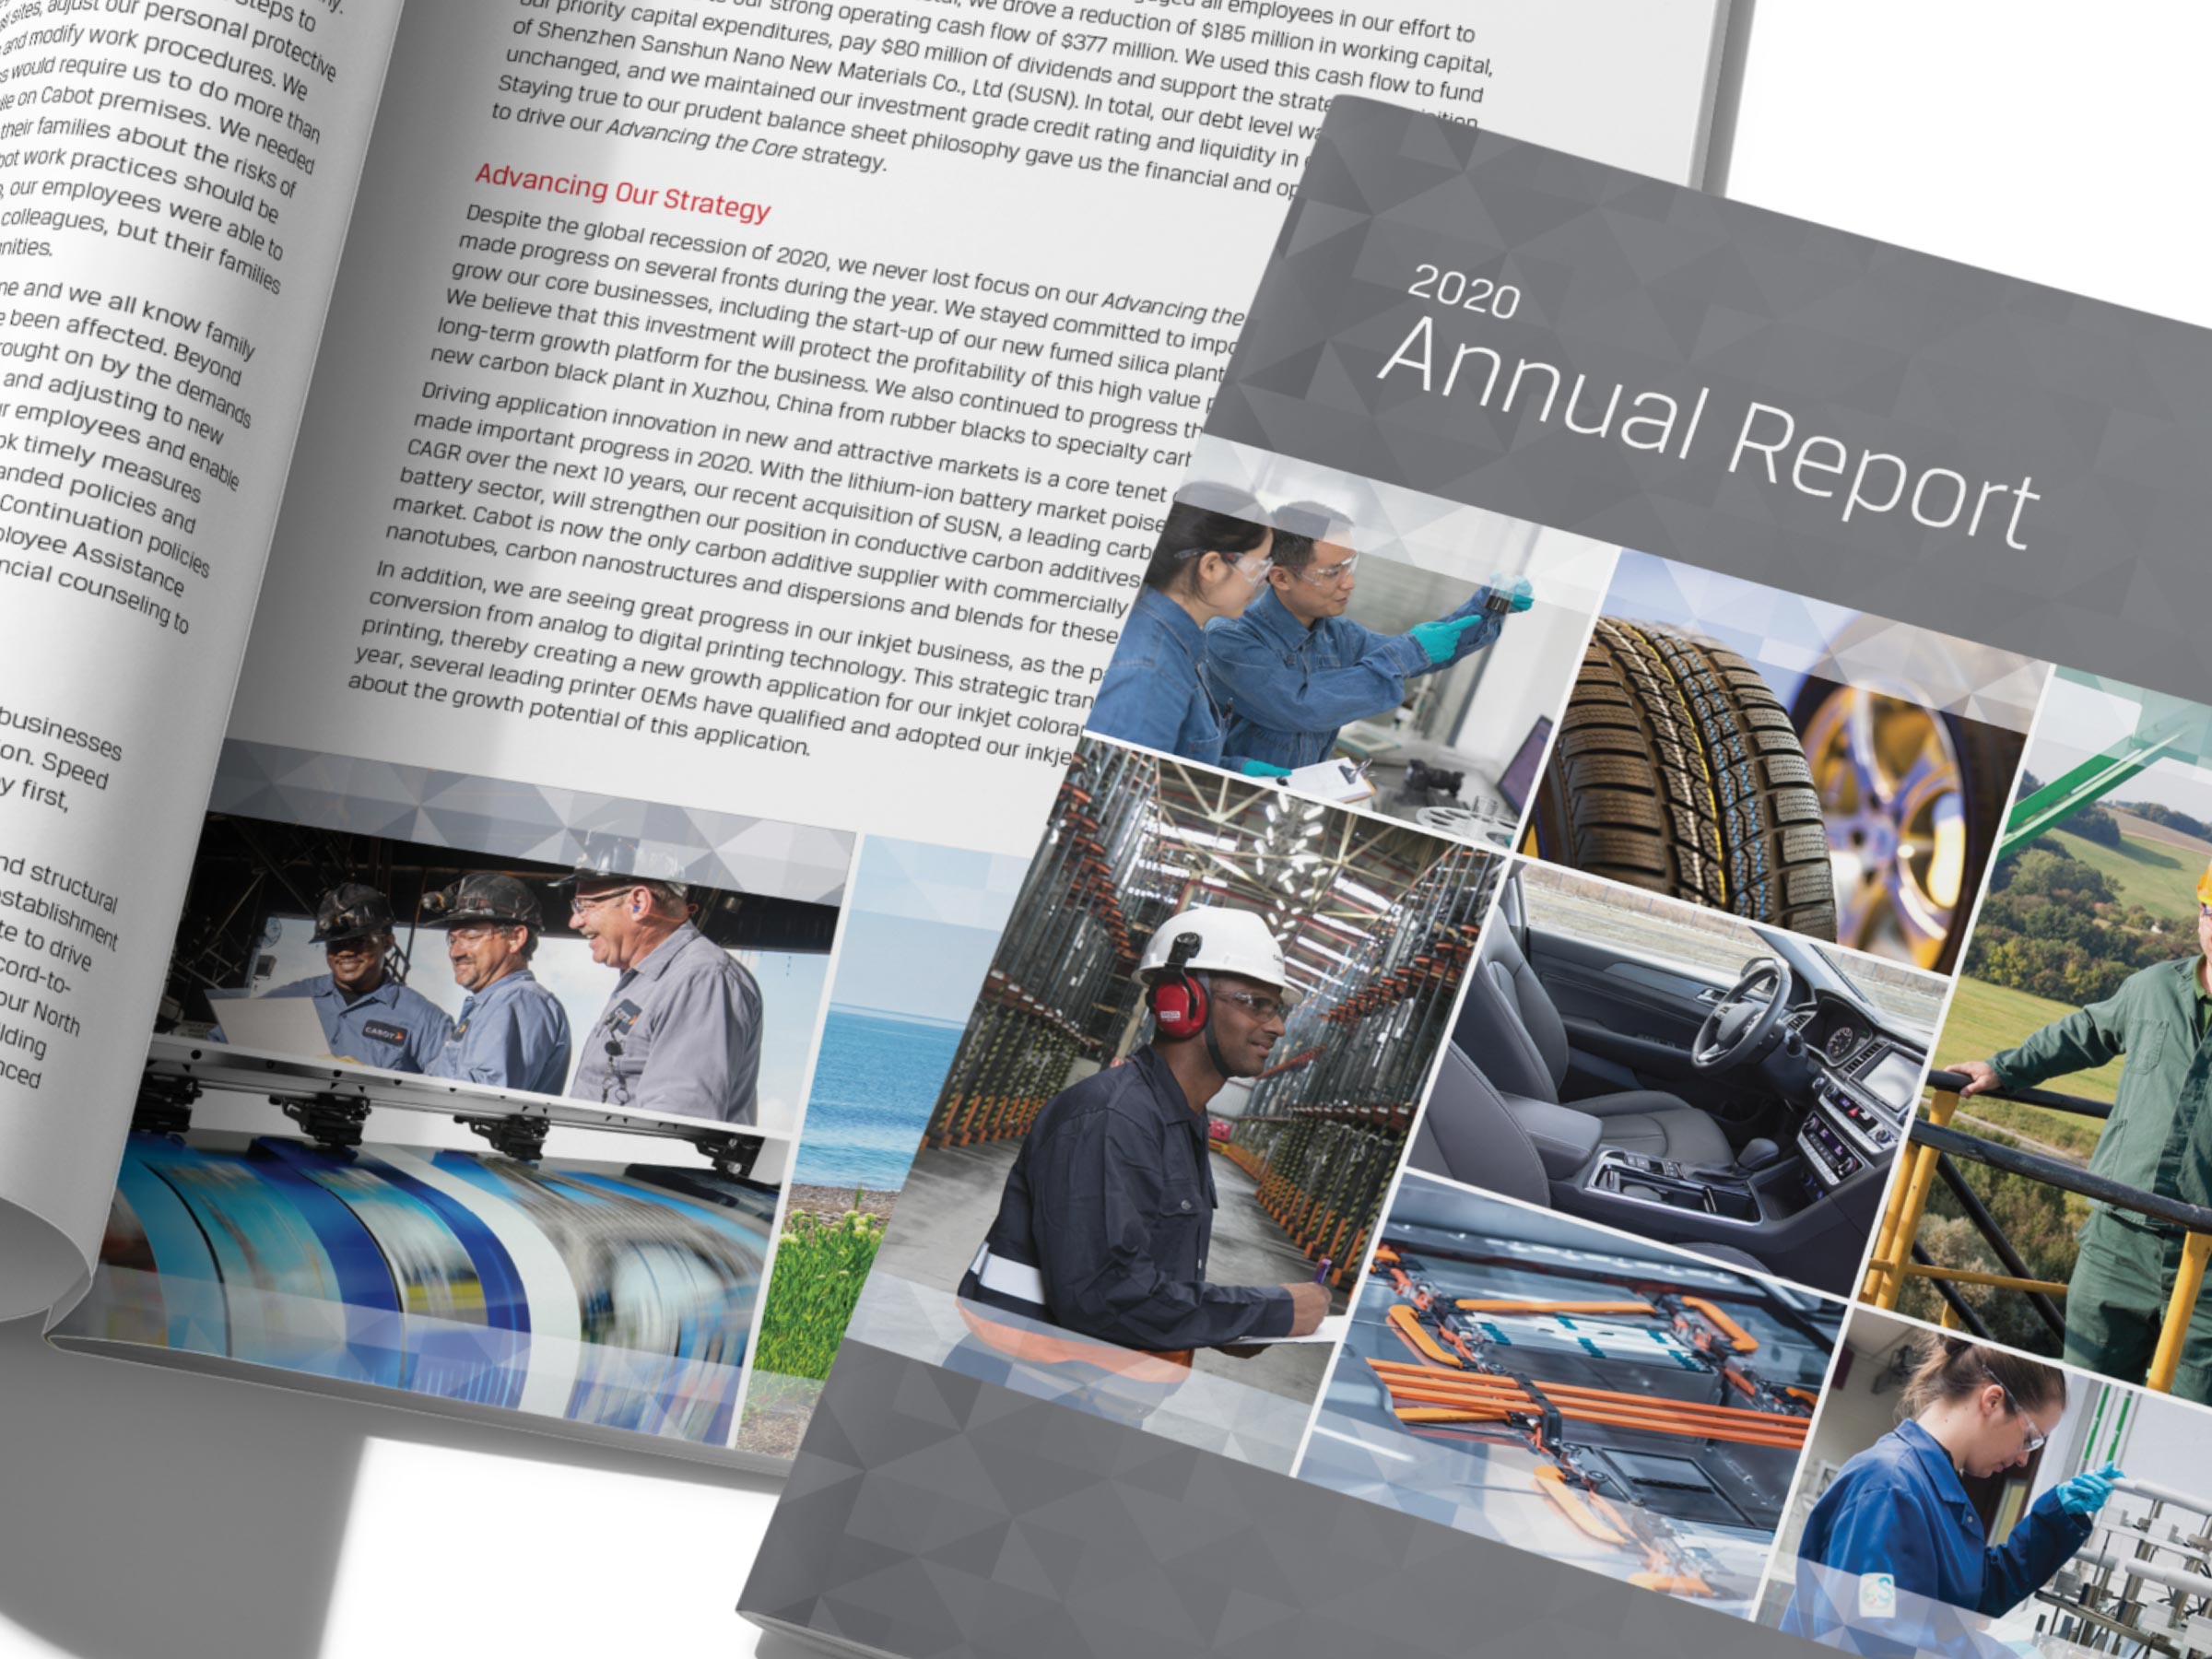 Corporate annual report